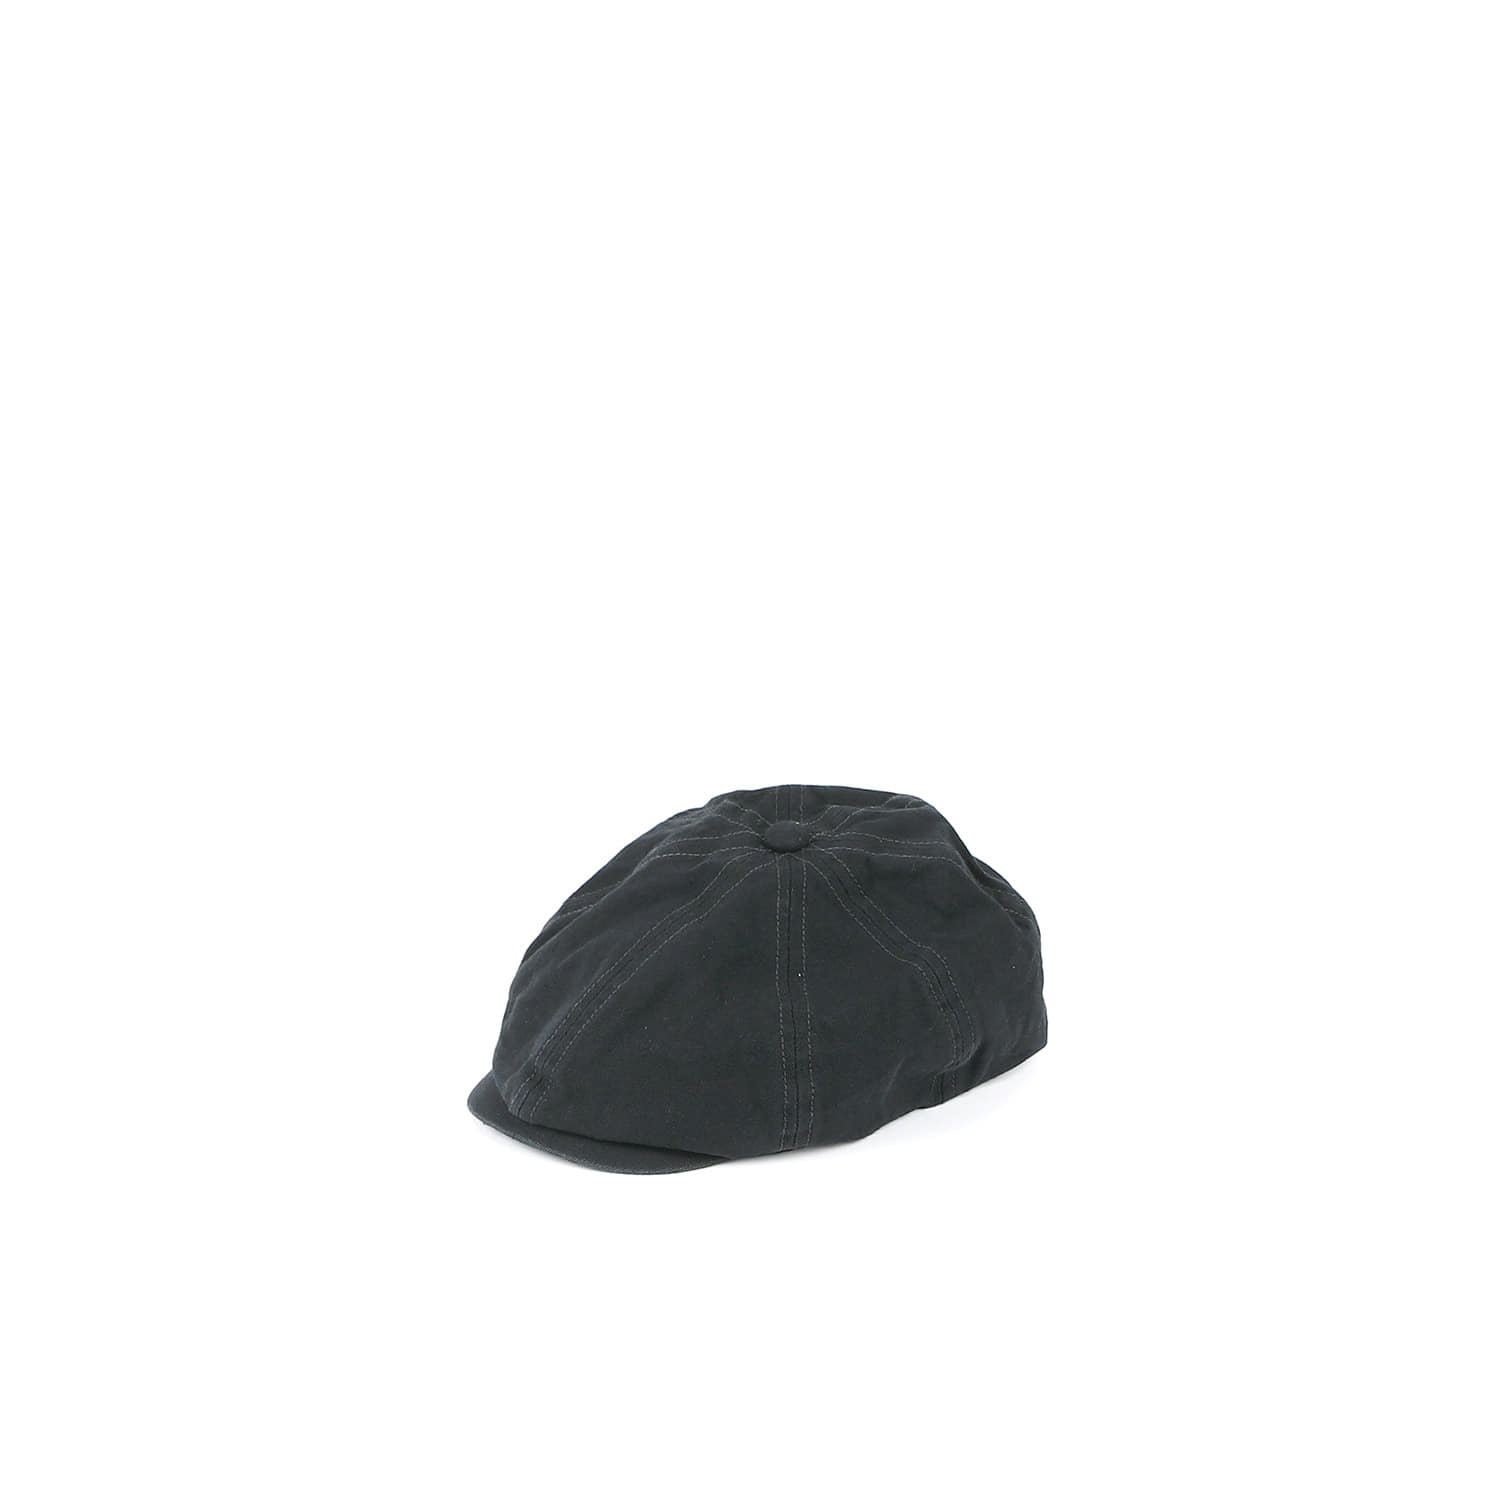 HARRIER SPORTS CAP (Black)